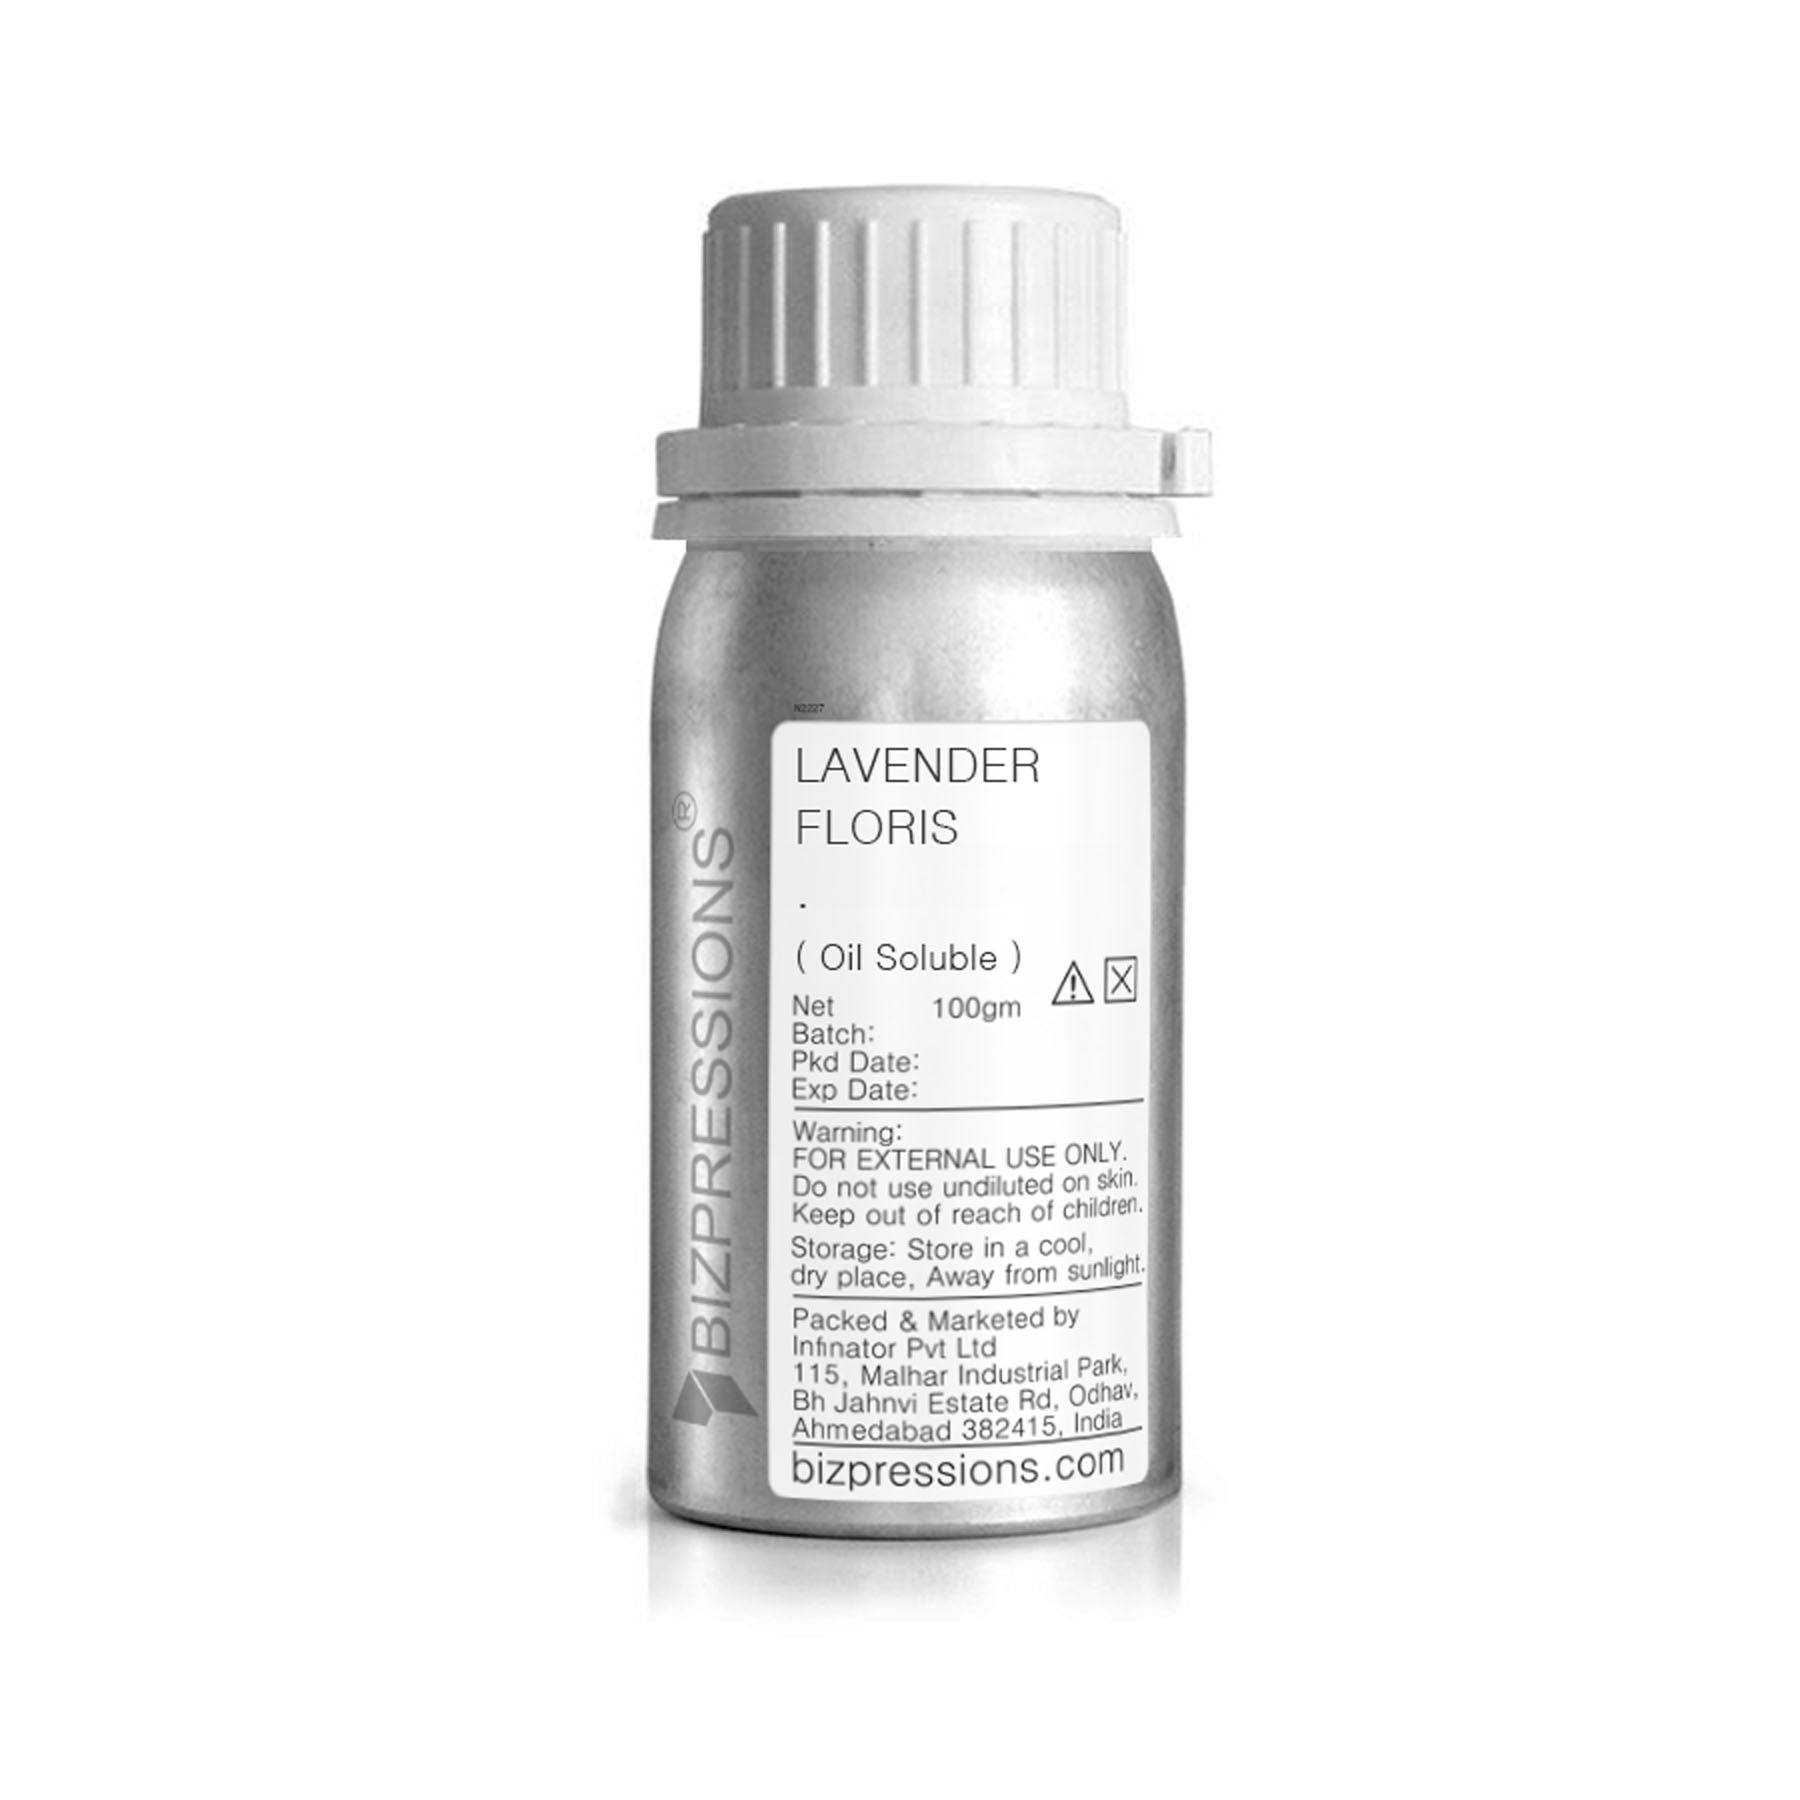 LAVENDER FLORIS - Fragrance ( Oil Soluble ) - 100 gm